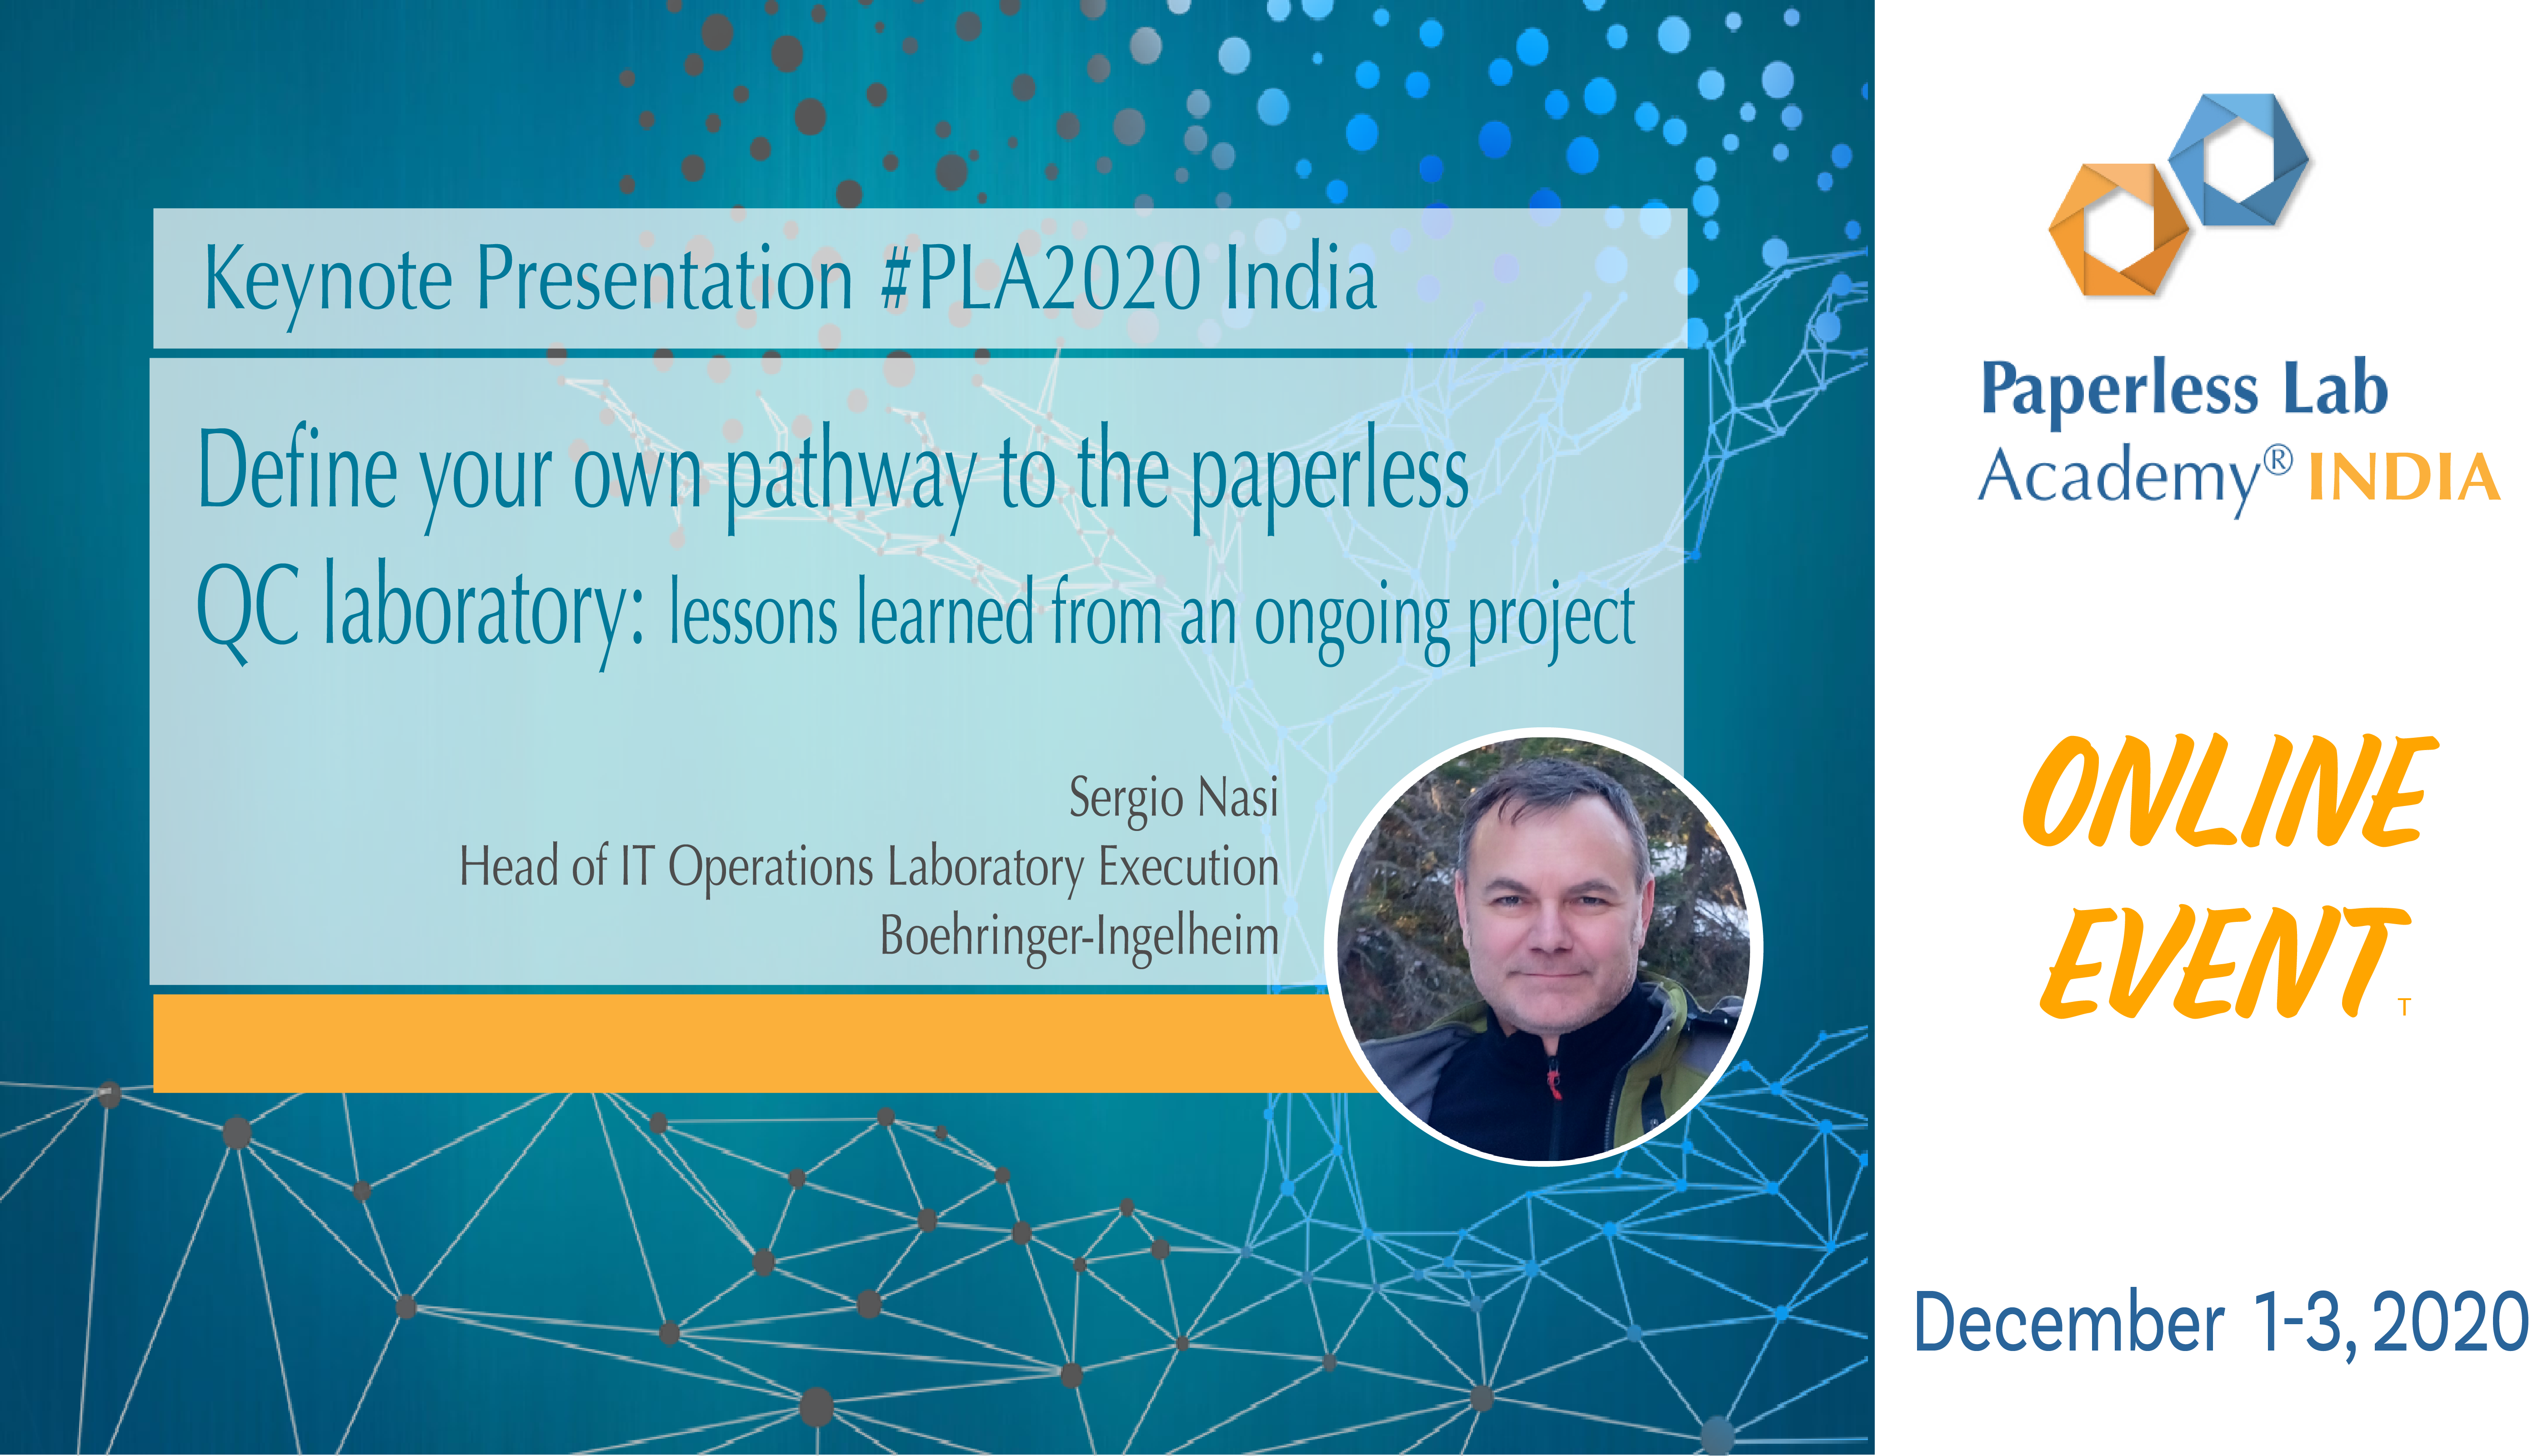 Boehringer presentation #PLA2020India - Paperless Lab Academy